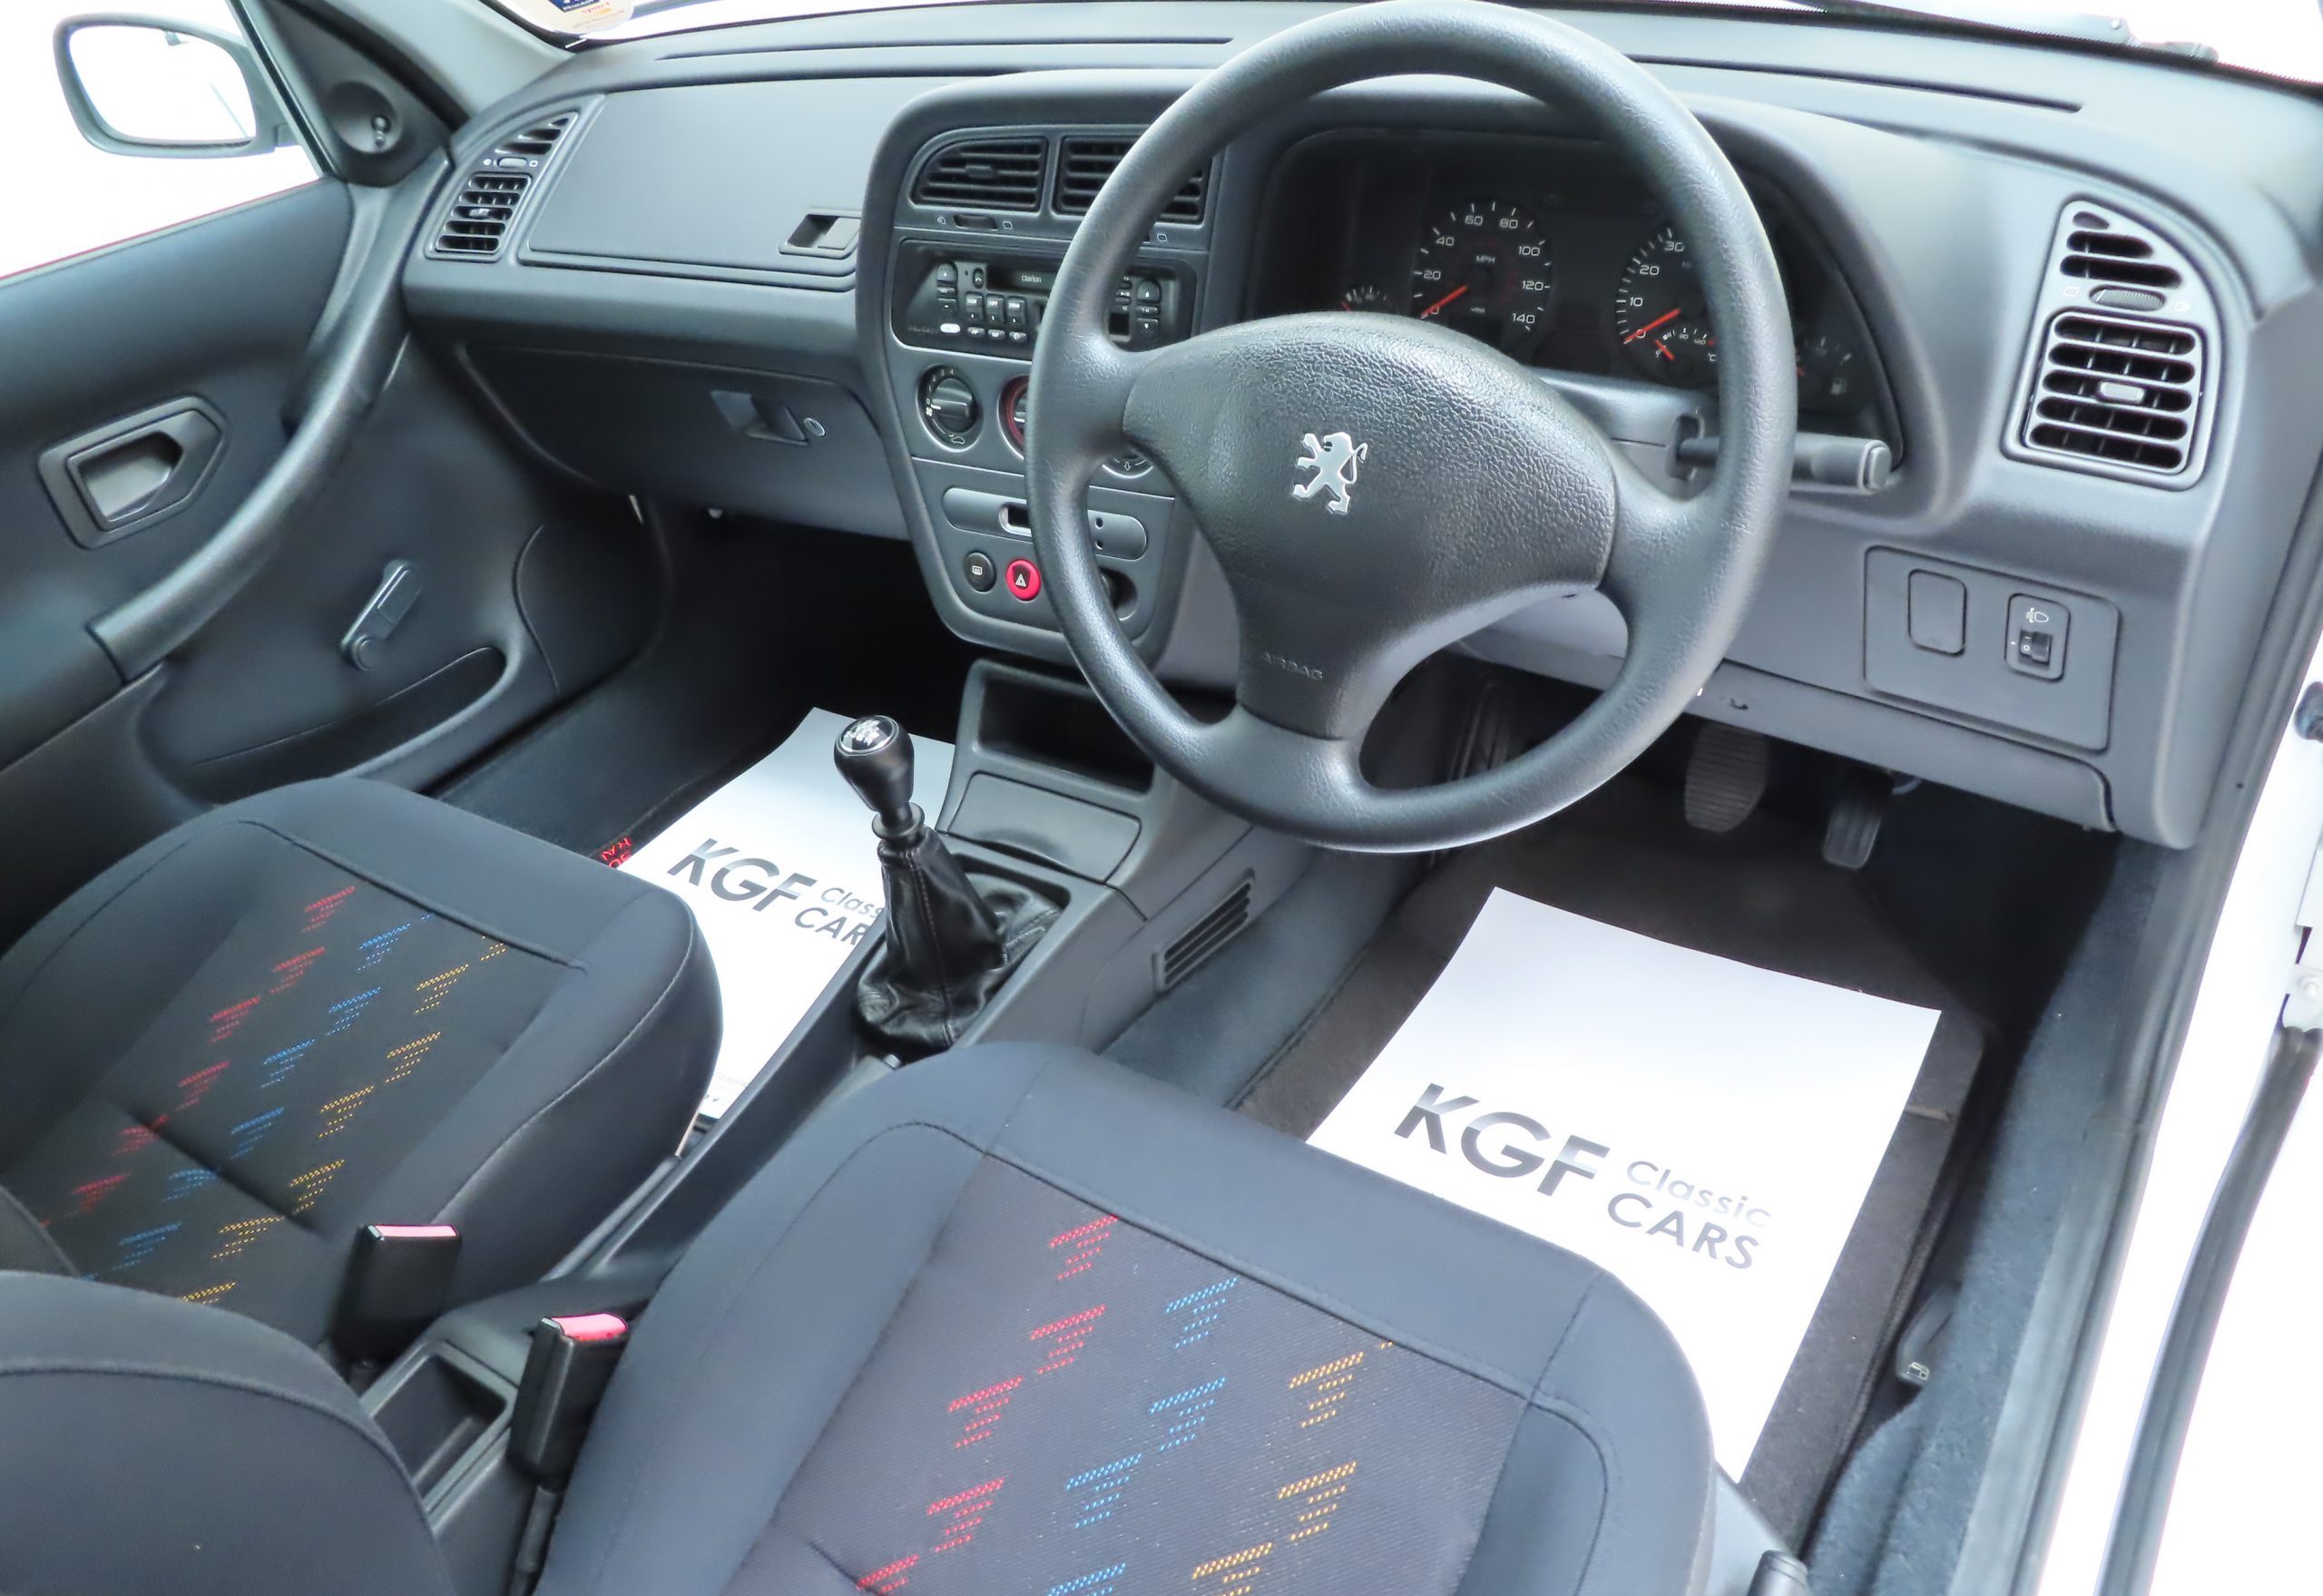 Peugeot 306 Rallye interior